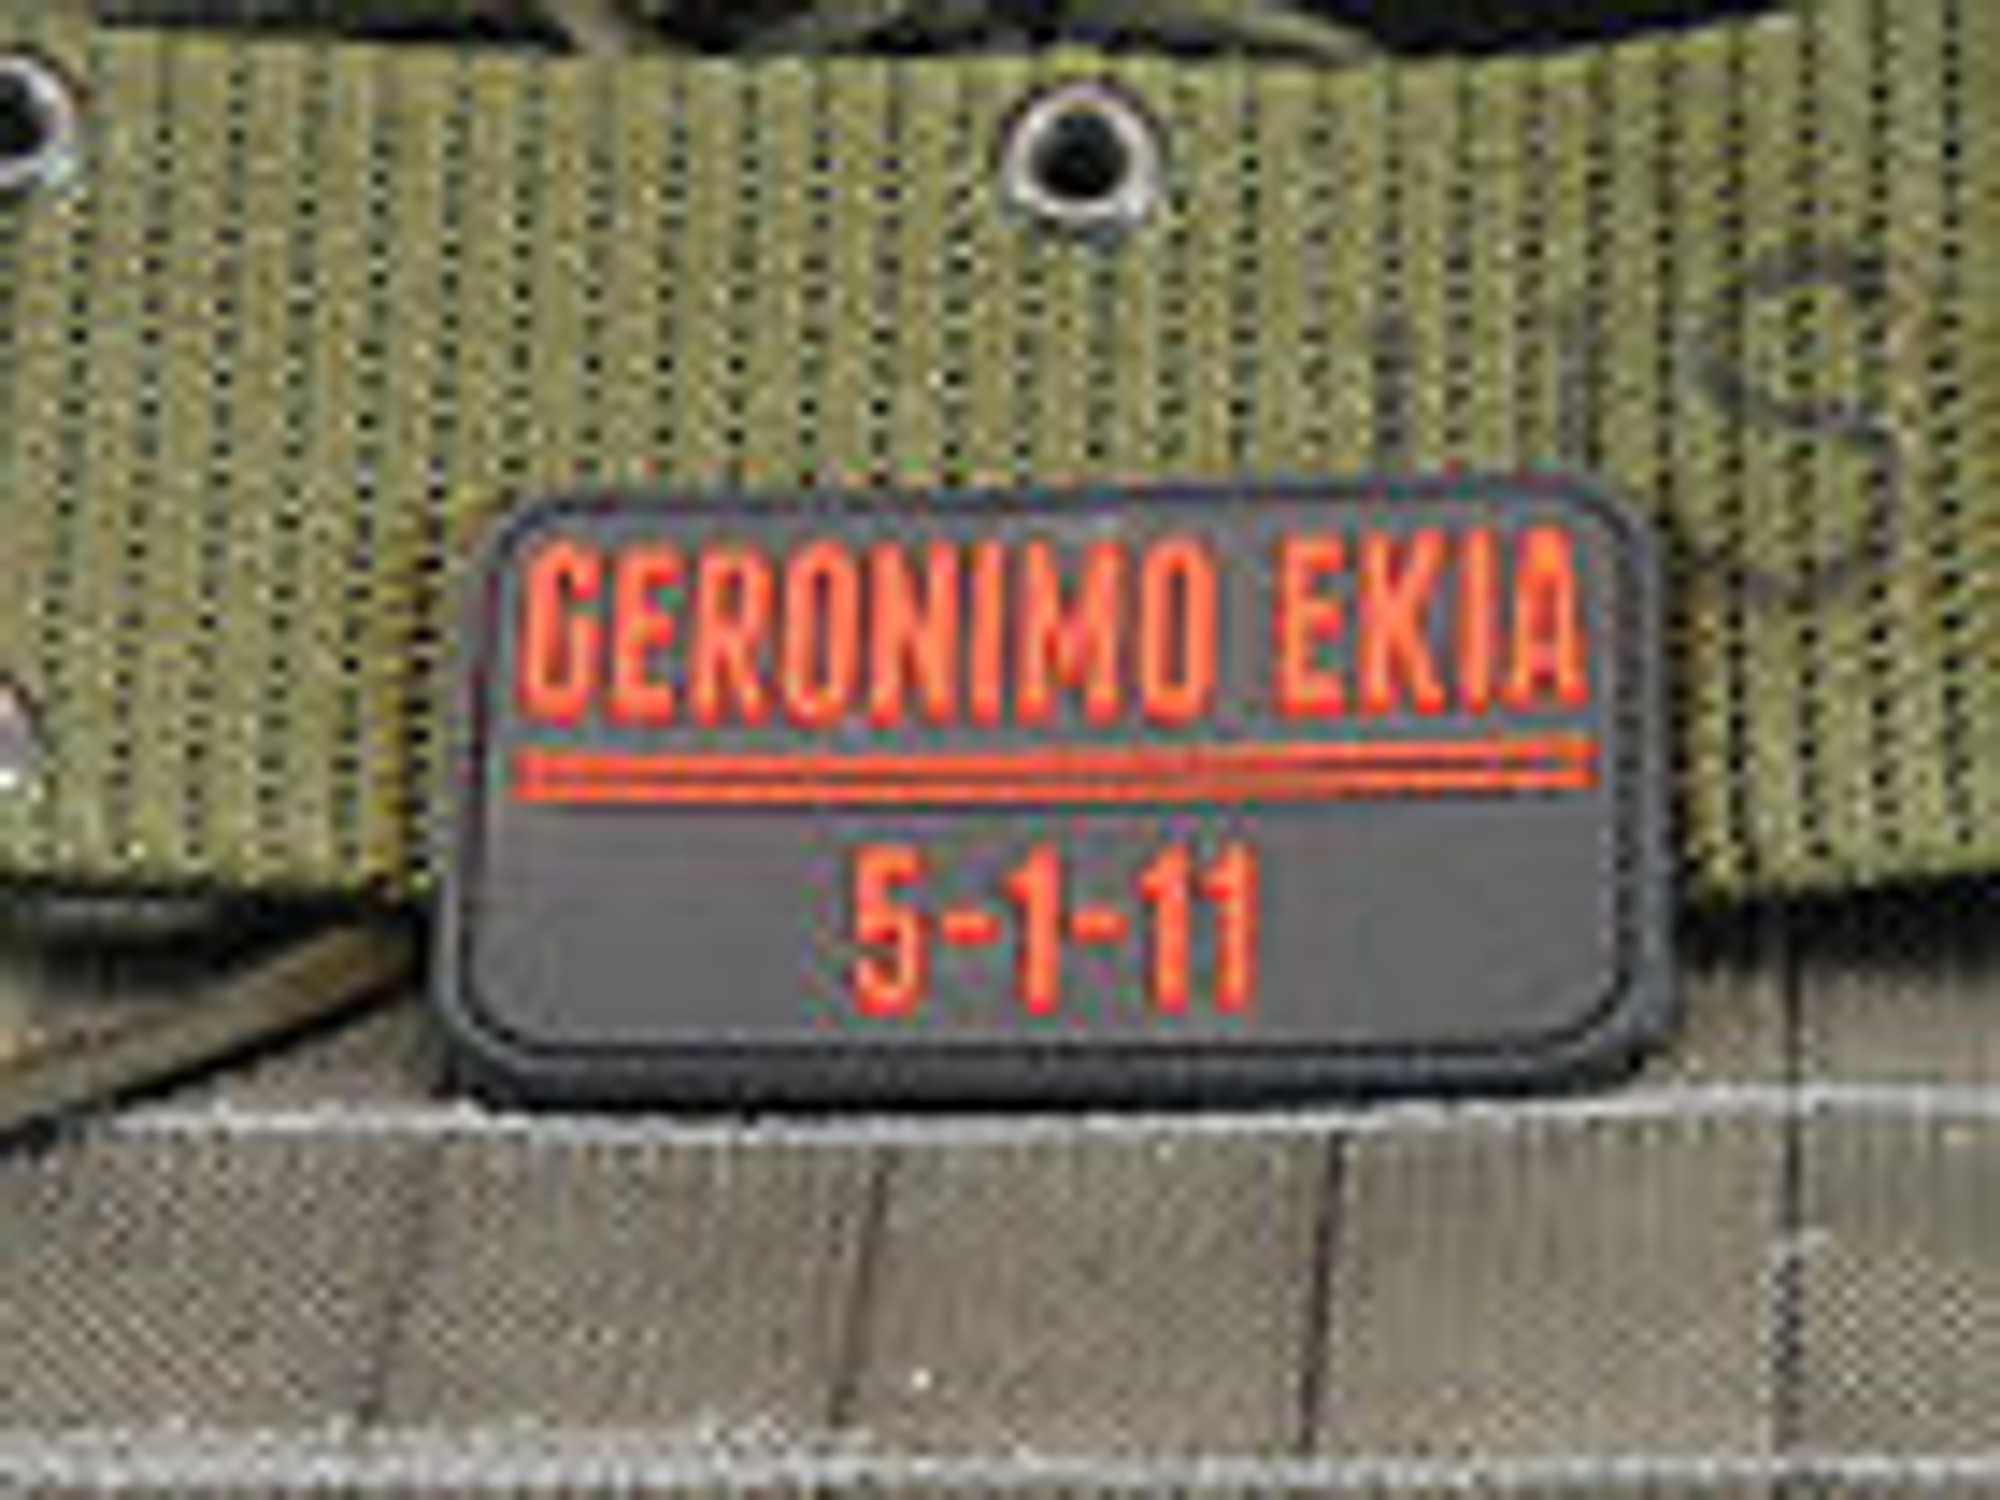 Geronimo Ekia 5-11-11 - Red - Morale Patch